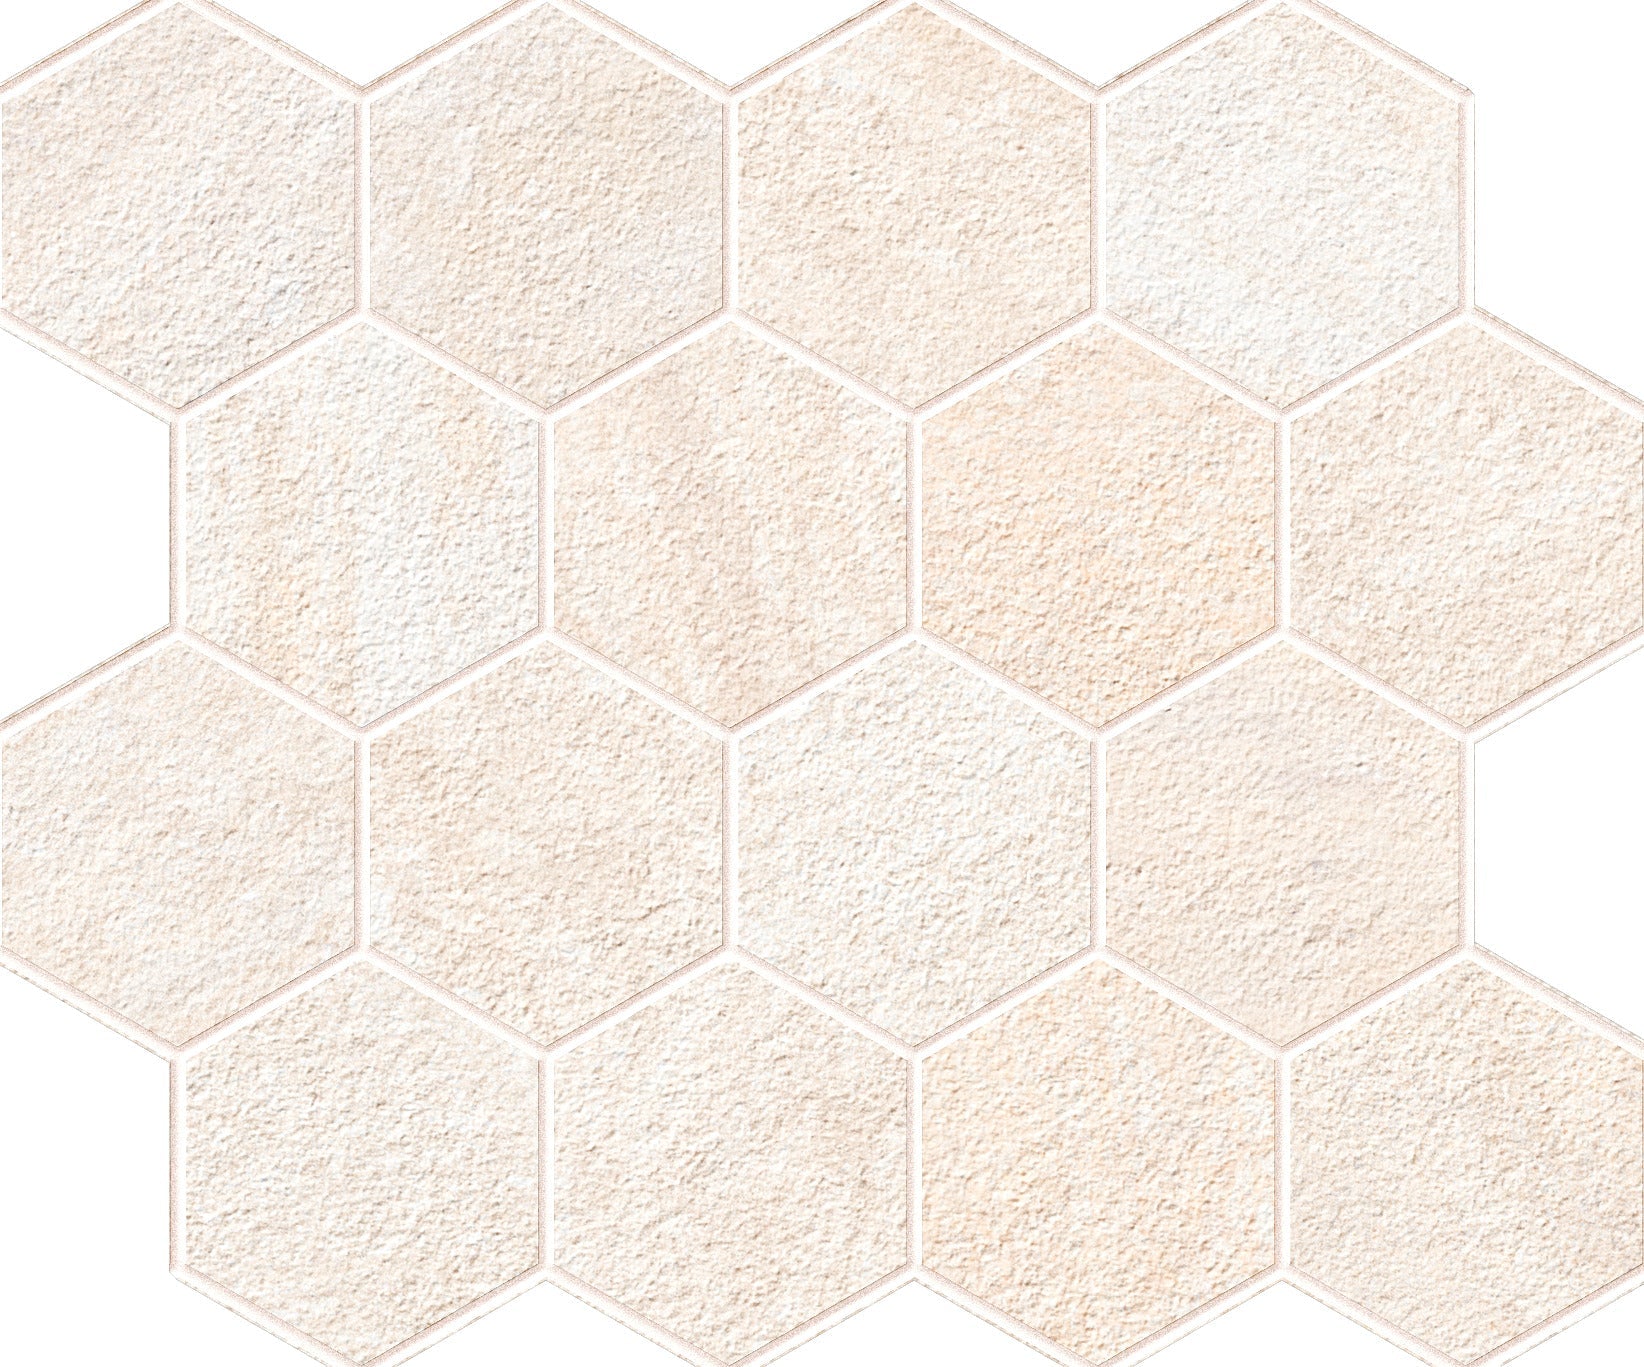 landmark 9mm explore african beige hexagon mosaic 12x10x9mm matte rectified porcelain tile distributed by surface group international